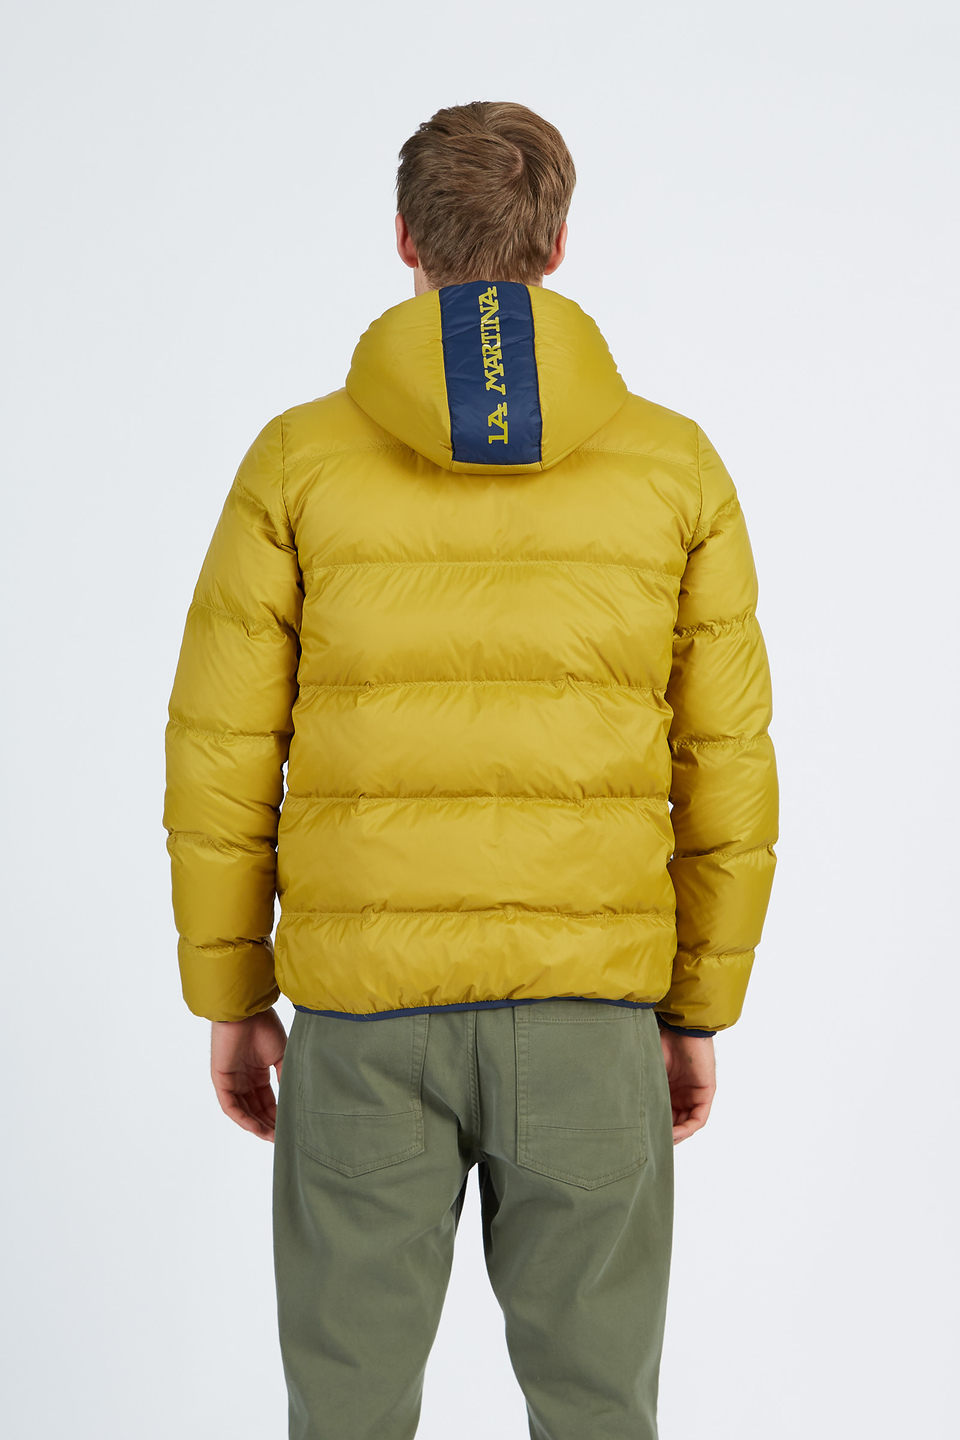 Men’s goose down jacket with regular fit zip closure | La Martina - Official Online Shop